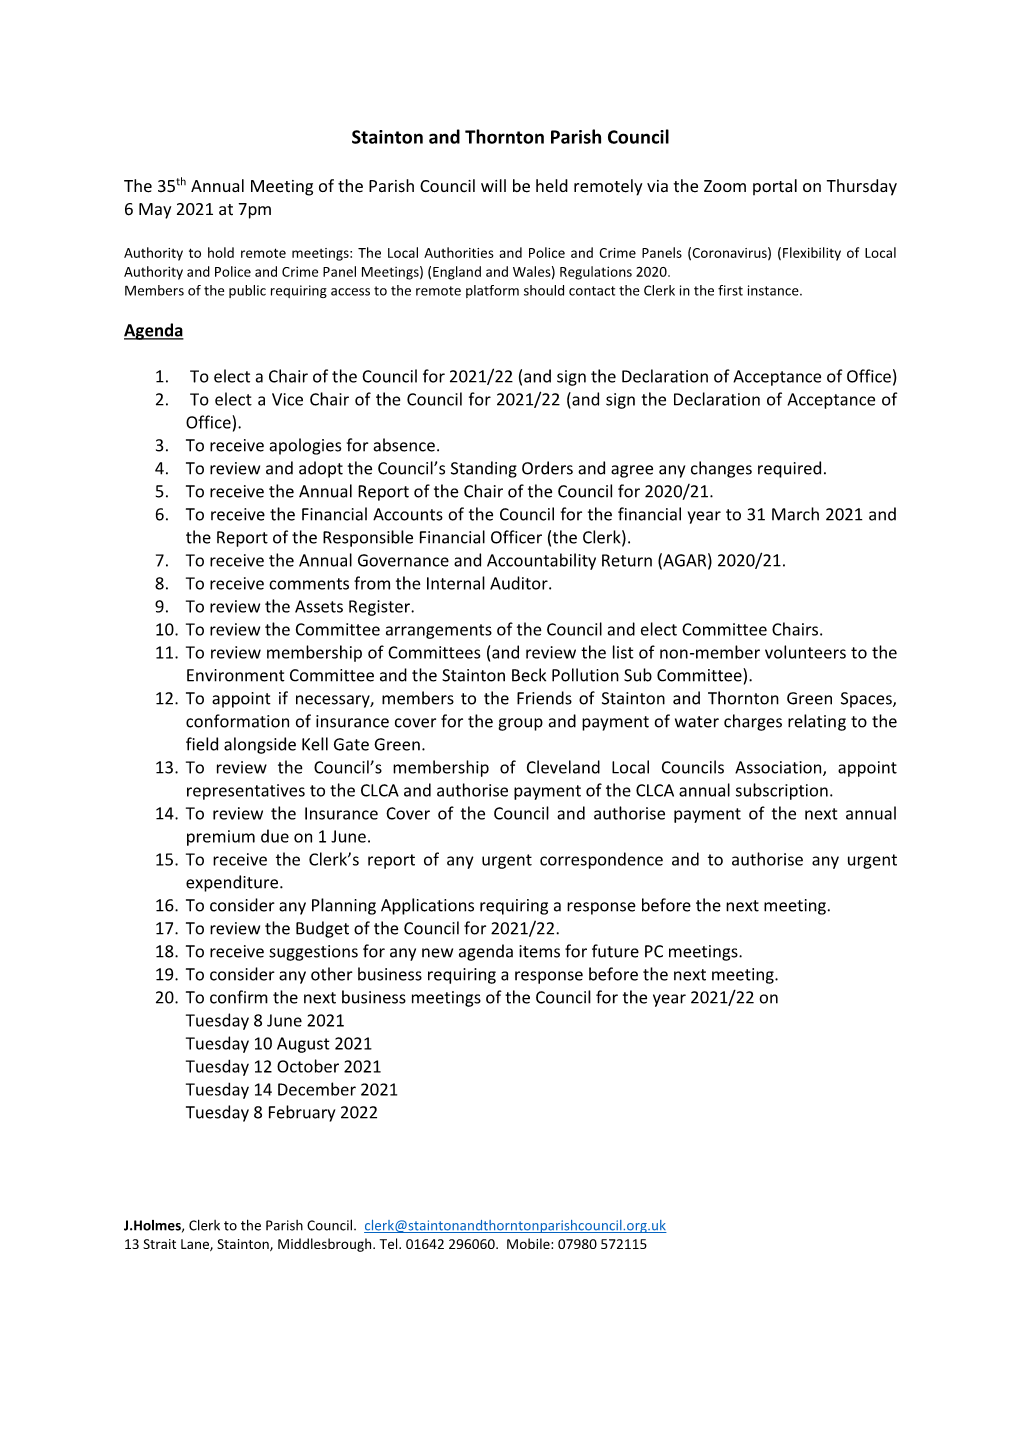 Link PDF Version of the Agenda